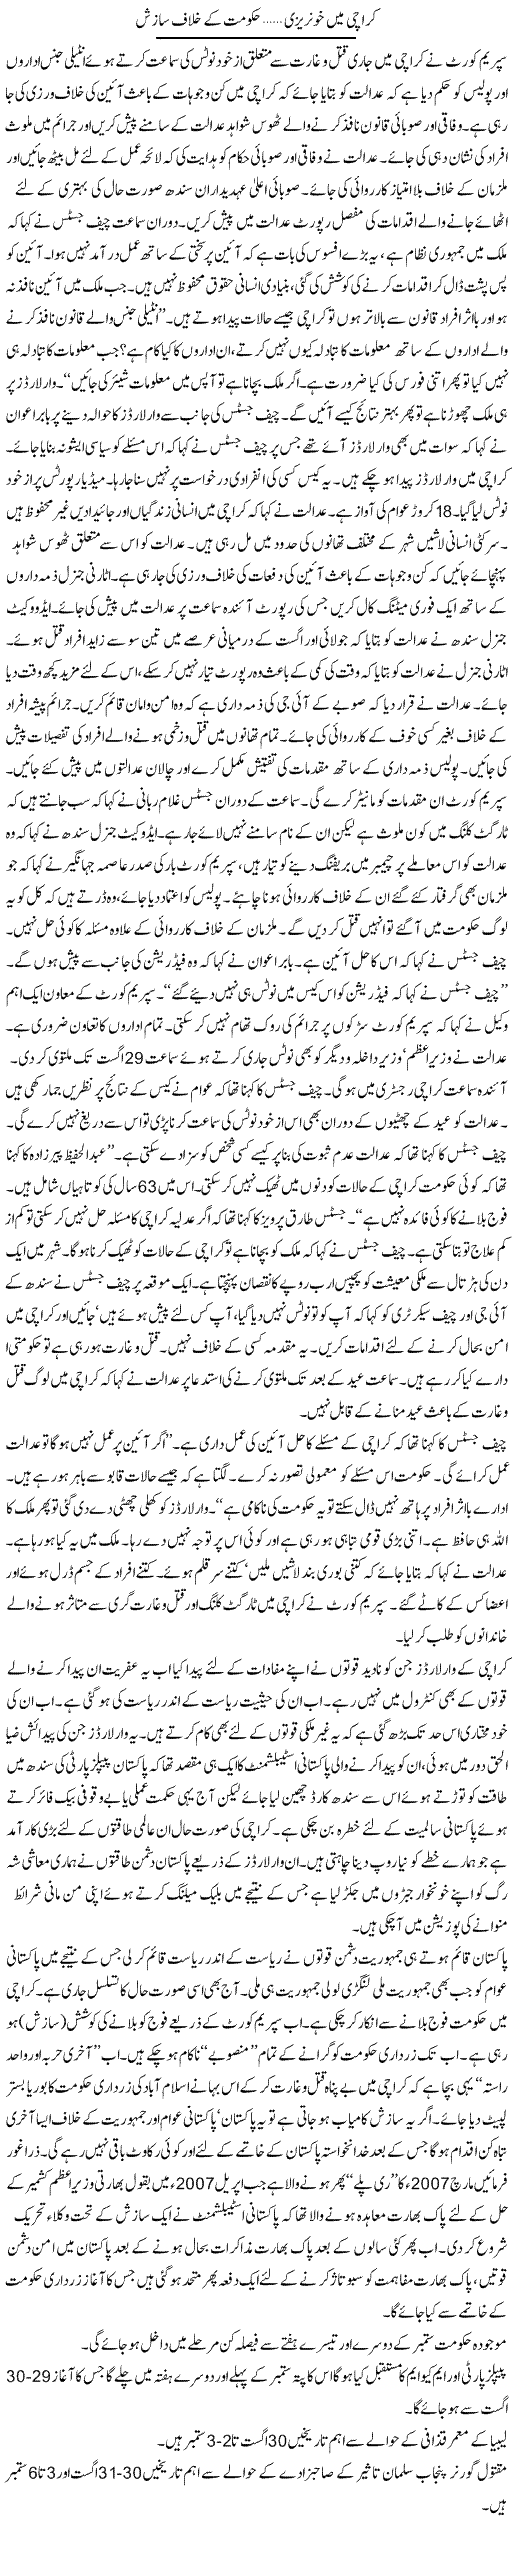 1101321409 2 Karachi Mein Khon Rayzi.. Hukumat Kay Khilaf Saazish by Zamurd Naqvi 